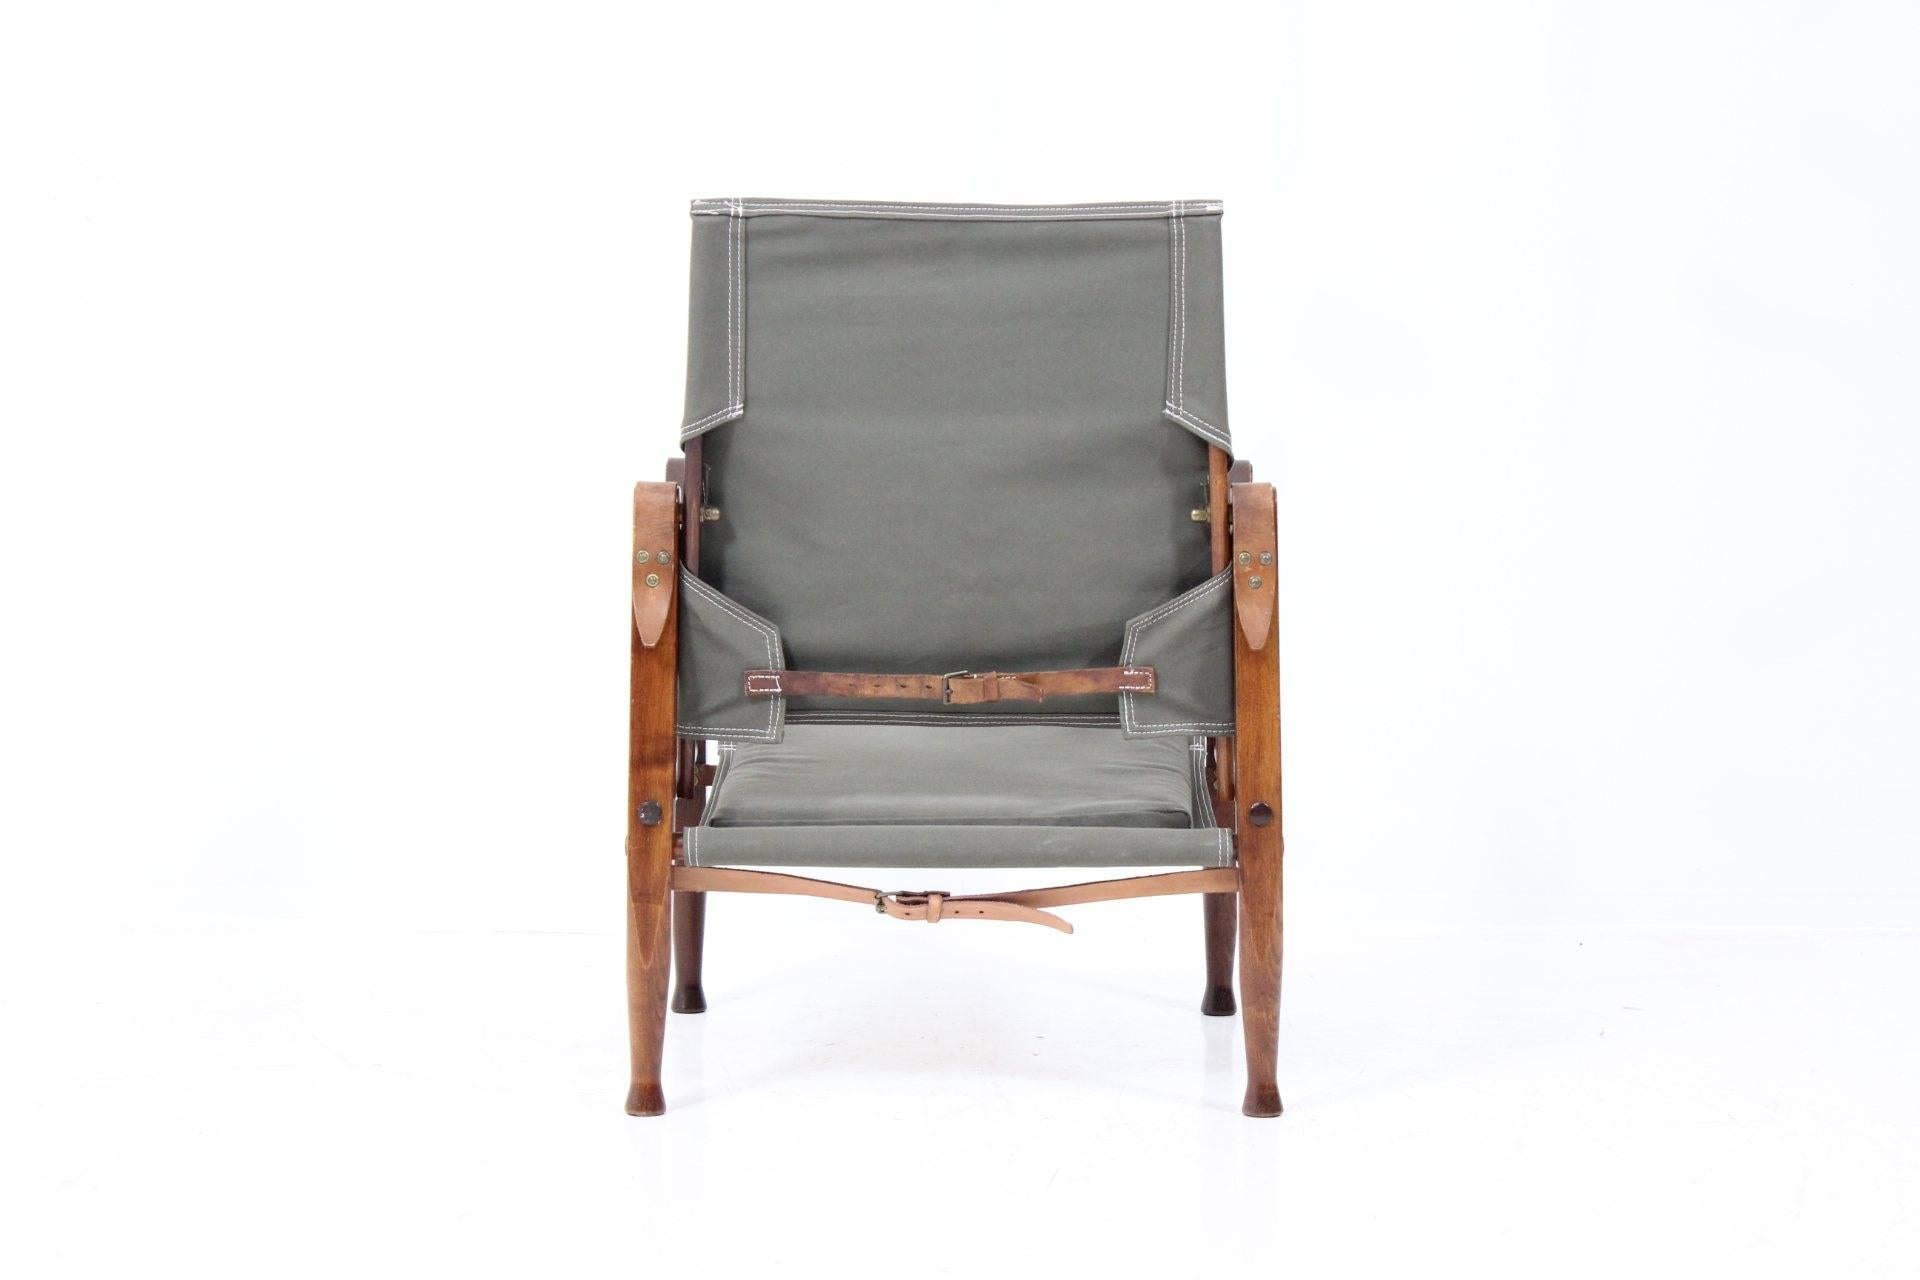 safari chair covers